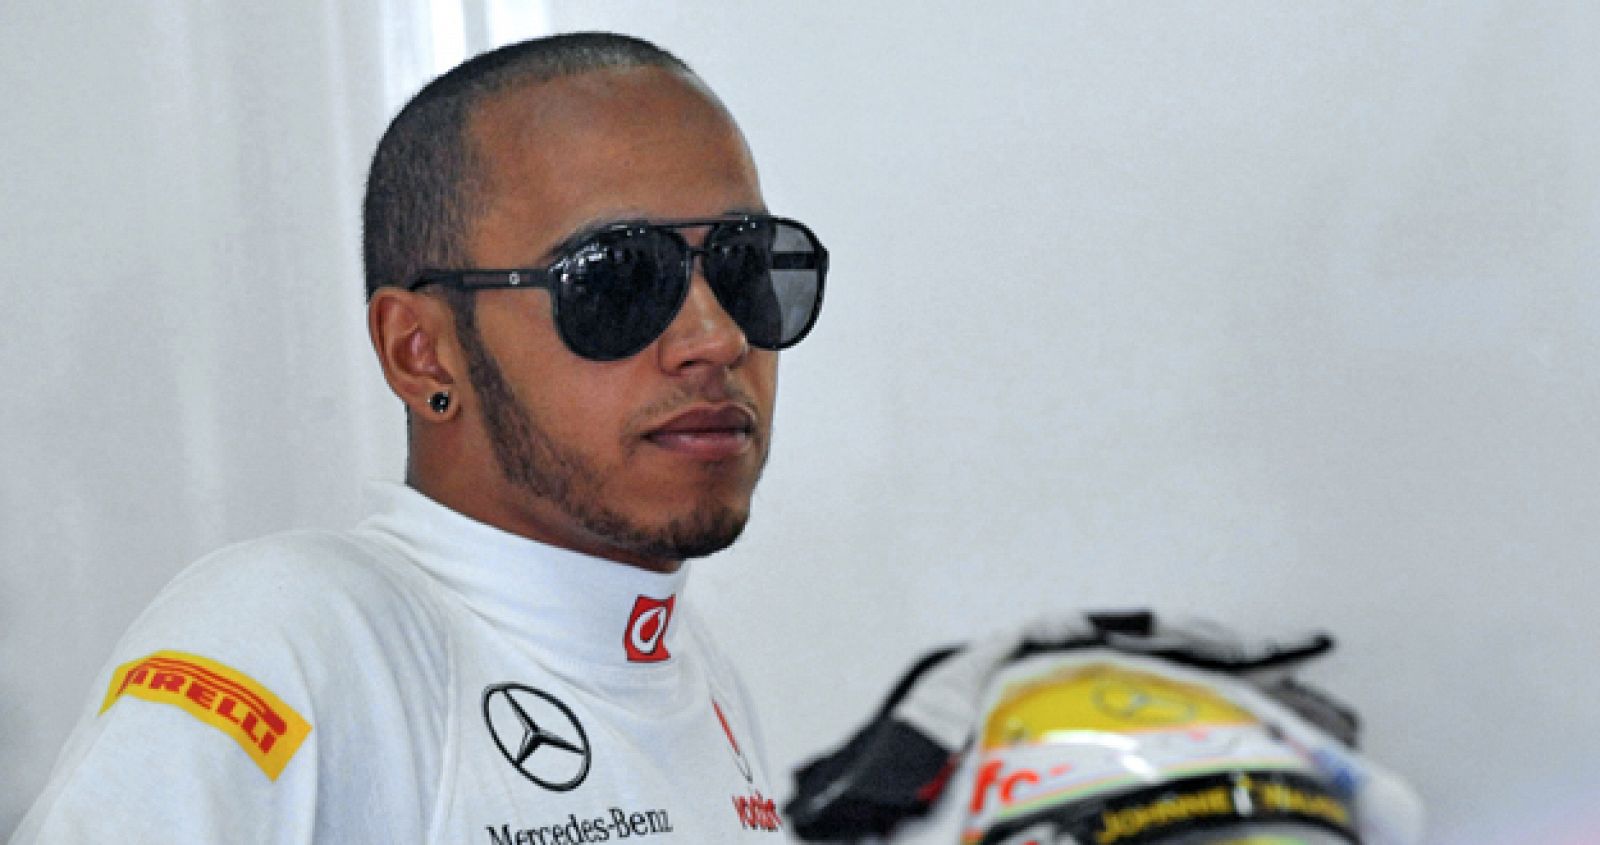 El piloto de McLaren, Lewis Hamilton, buscará en Sepang su segunda 'pole' consecutiva.